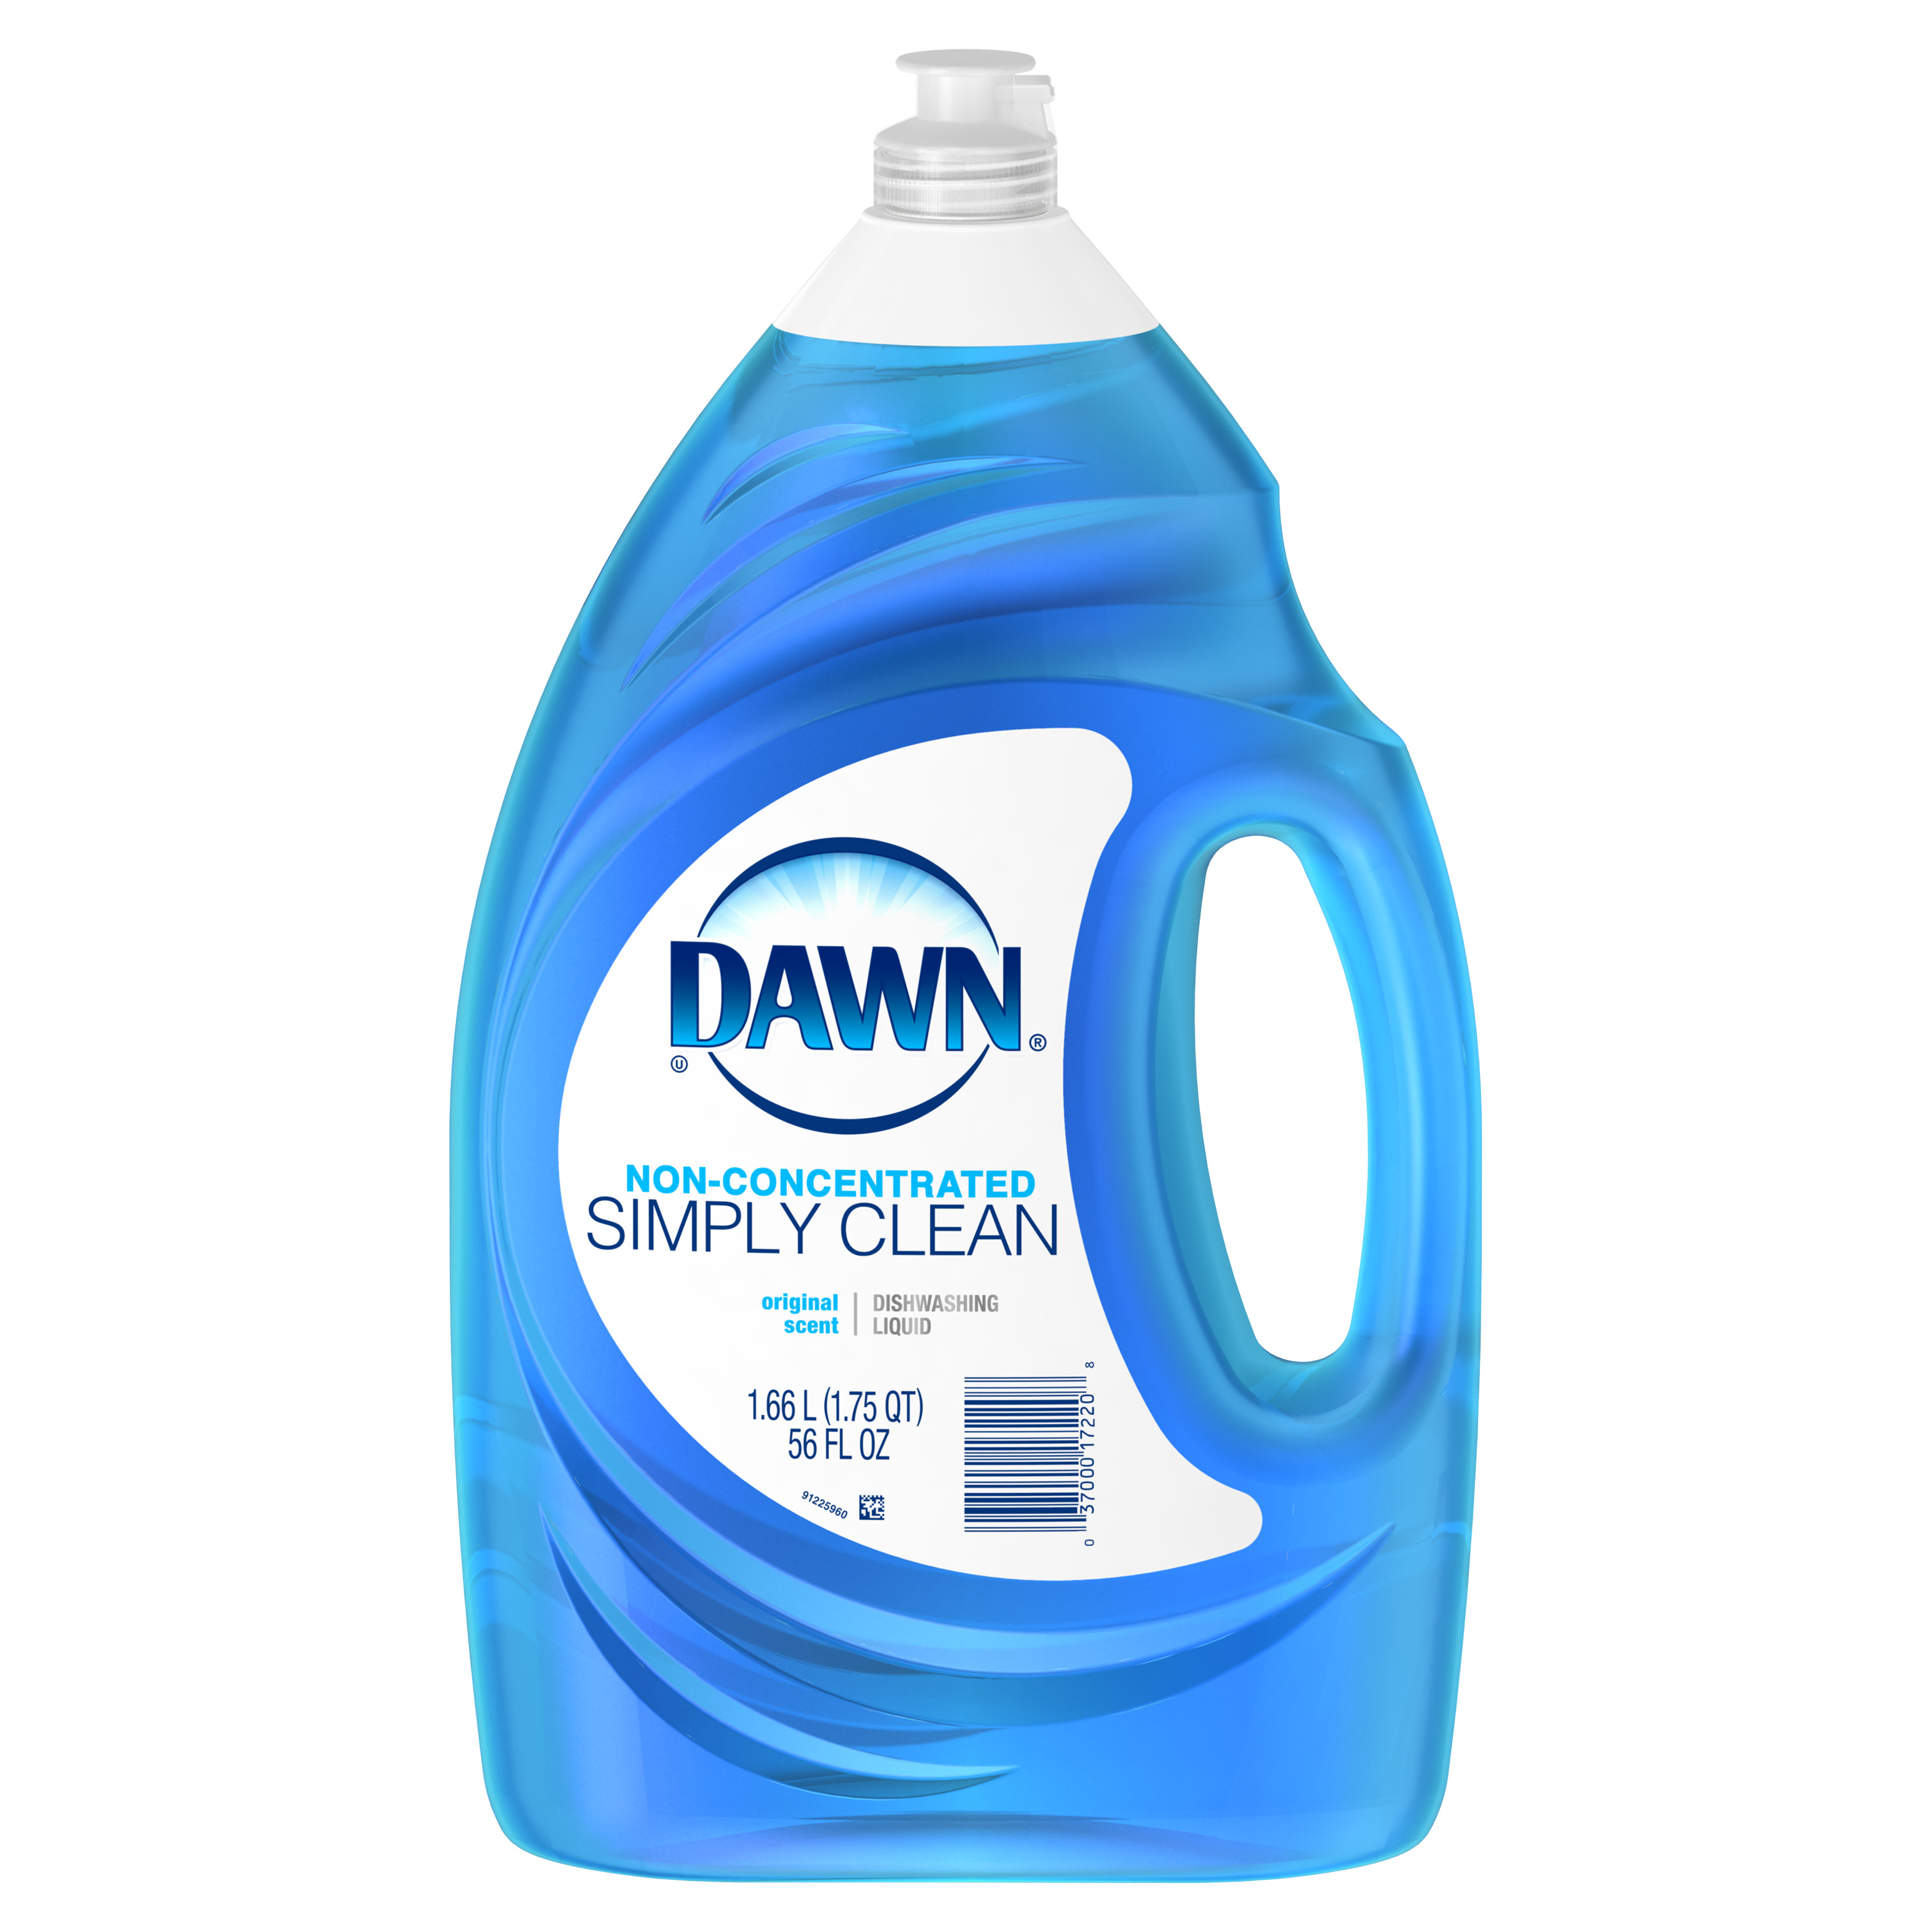 Dawn Simply Clean Dishwashing Liquid Dish Soap, Original Scent, 56 fl oz - image 4 of 5